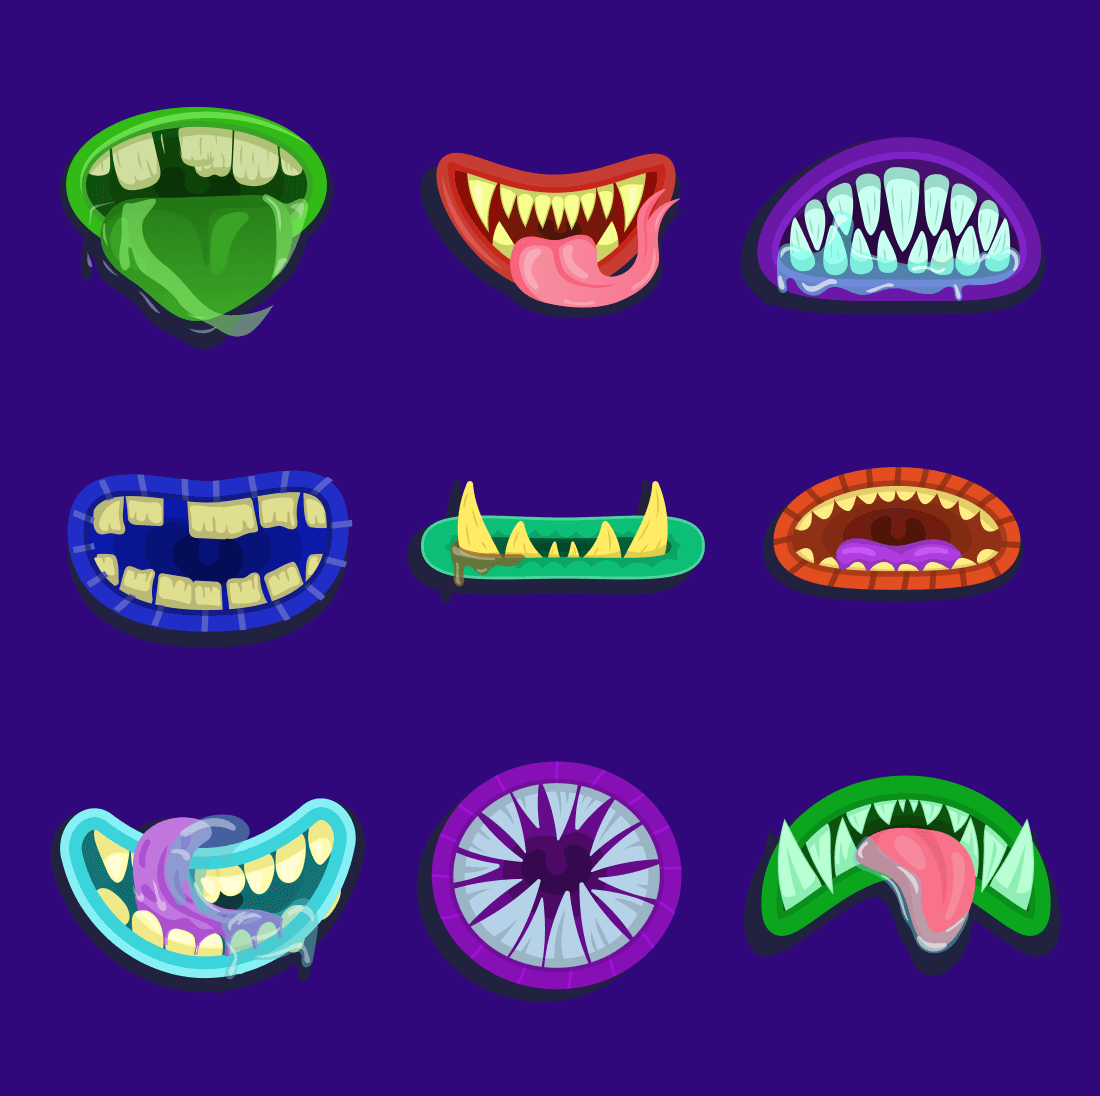 Disgusting teeth of monsters on purple background close-up.